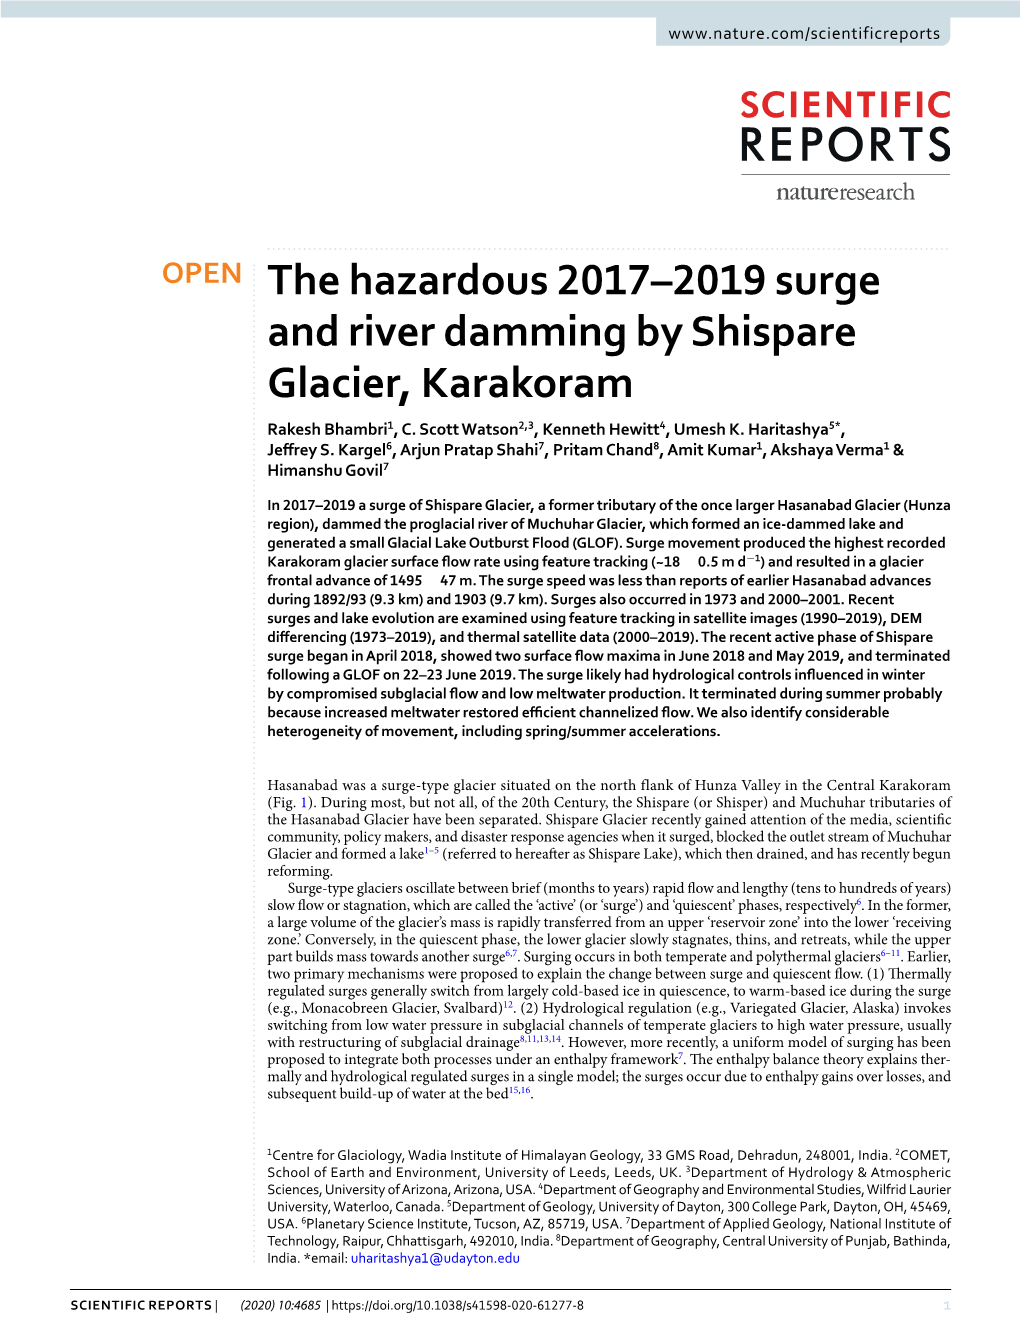 The Hazardous 2017–2019 Surge and River Damming by Shispare Glacier, Karakoram Rakesh Bhambri1, C